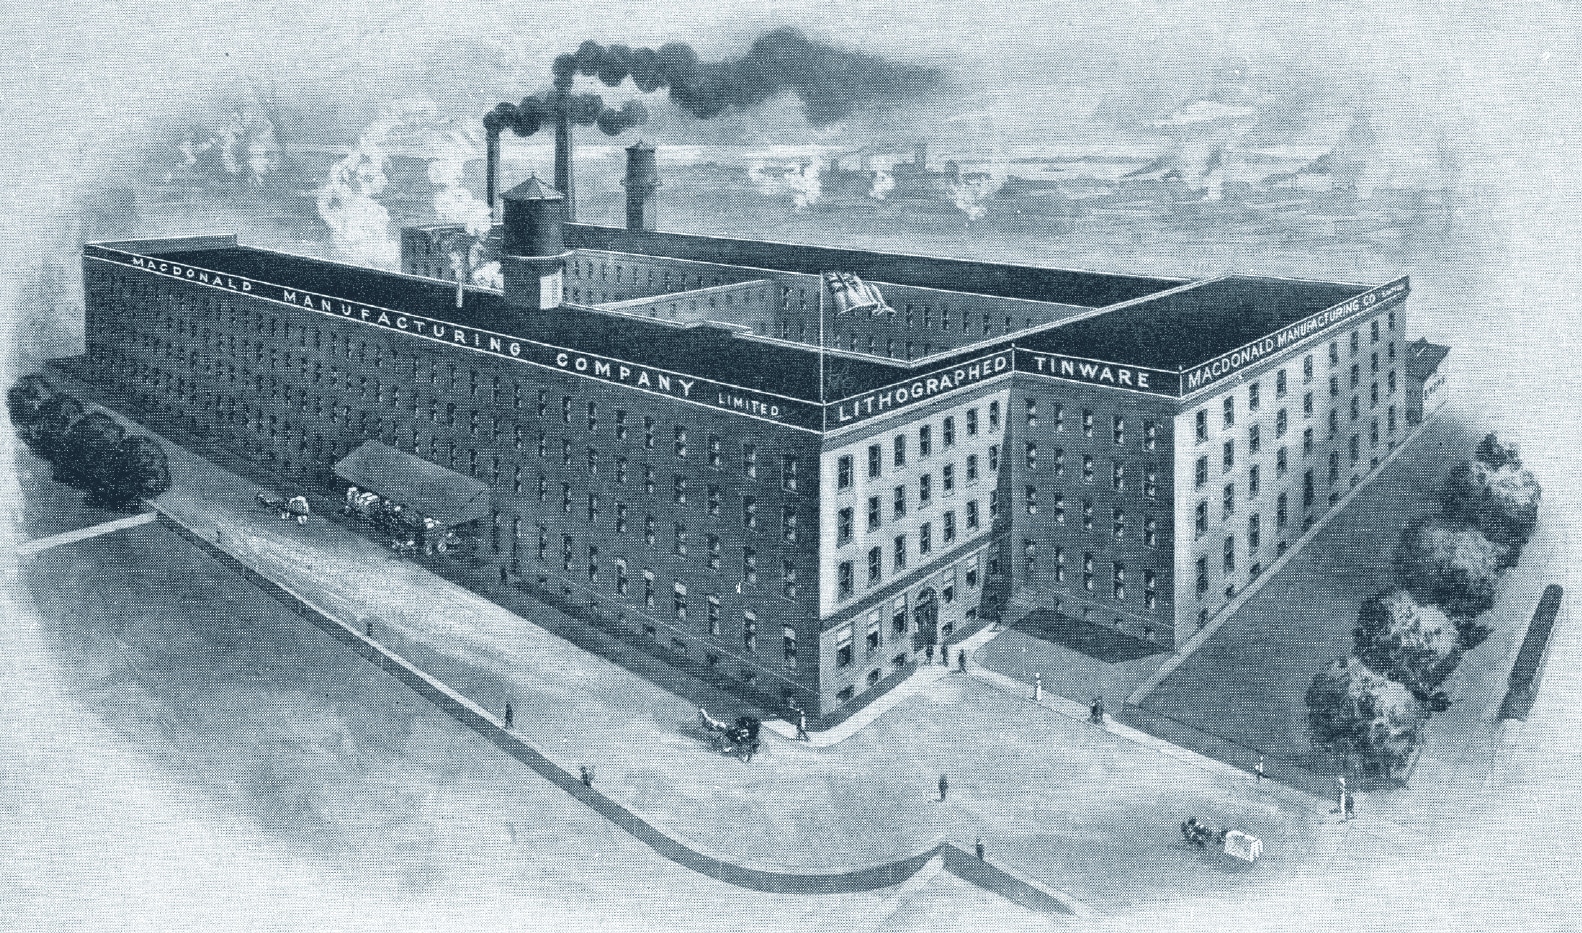 Macdonald Manufacturing Company